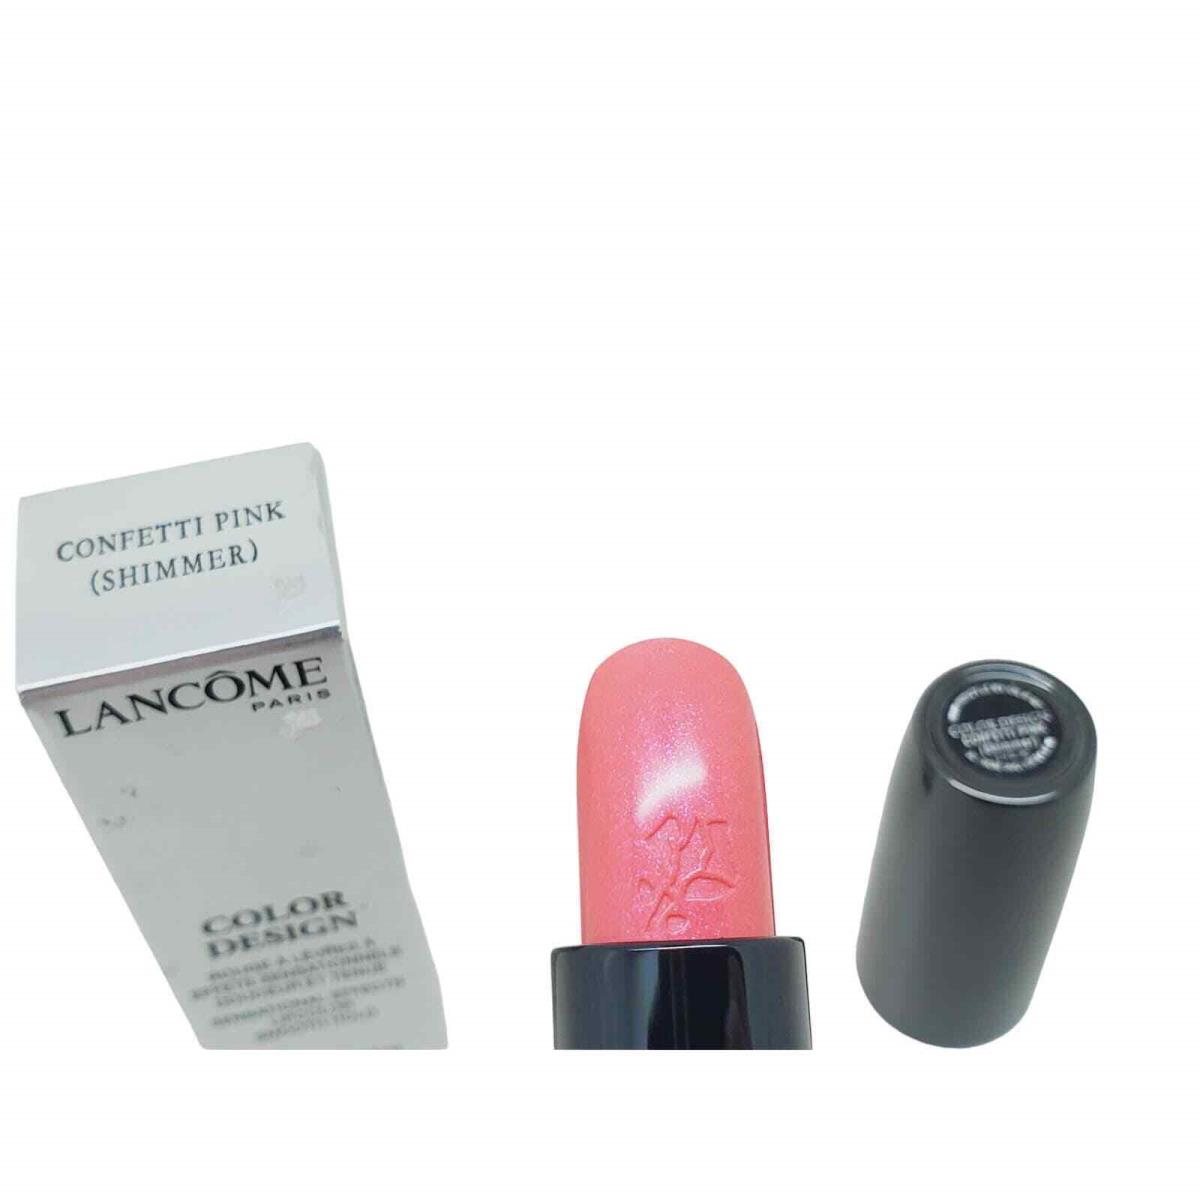 Lancome Lanc me Color Design Lipstick Confetti Pink Shimmer